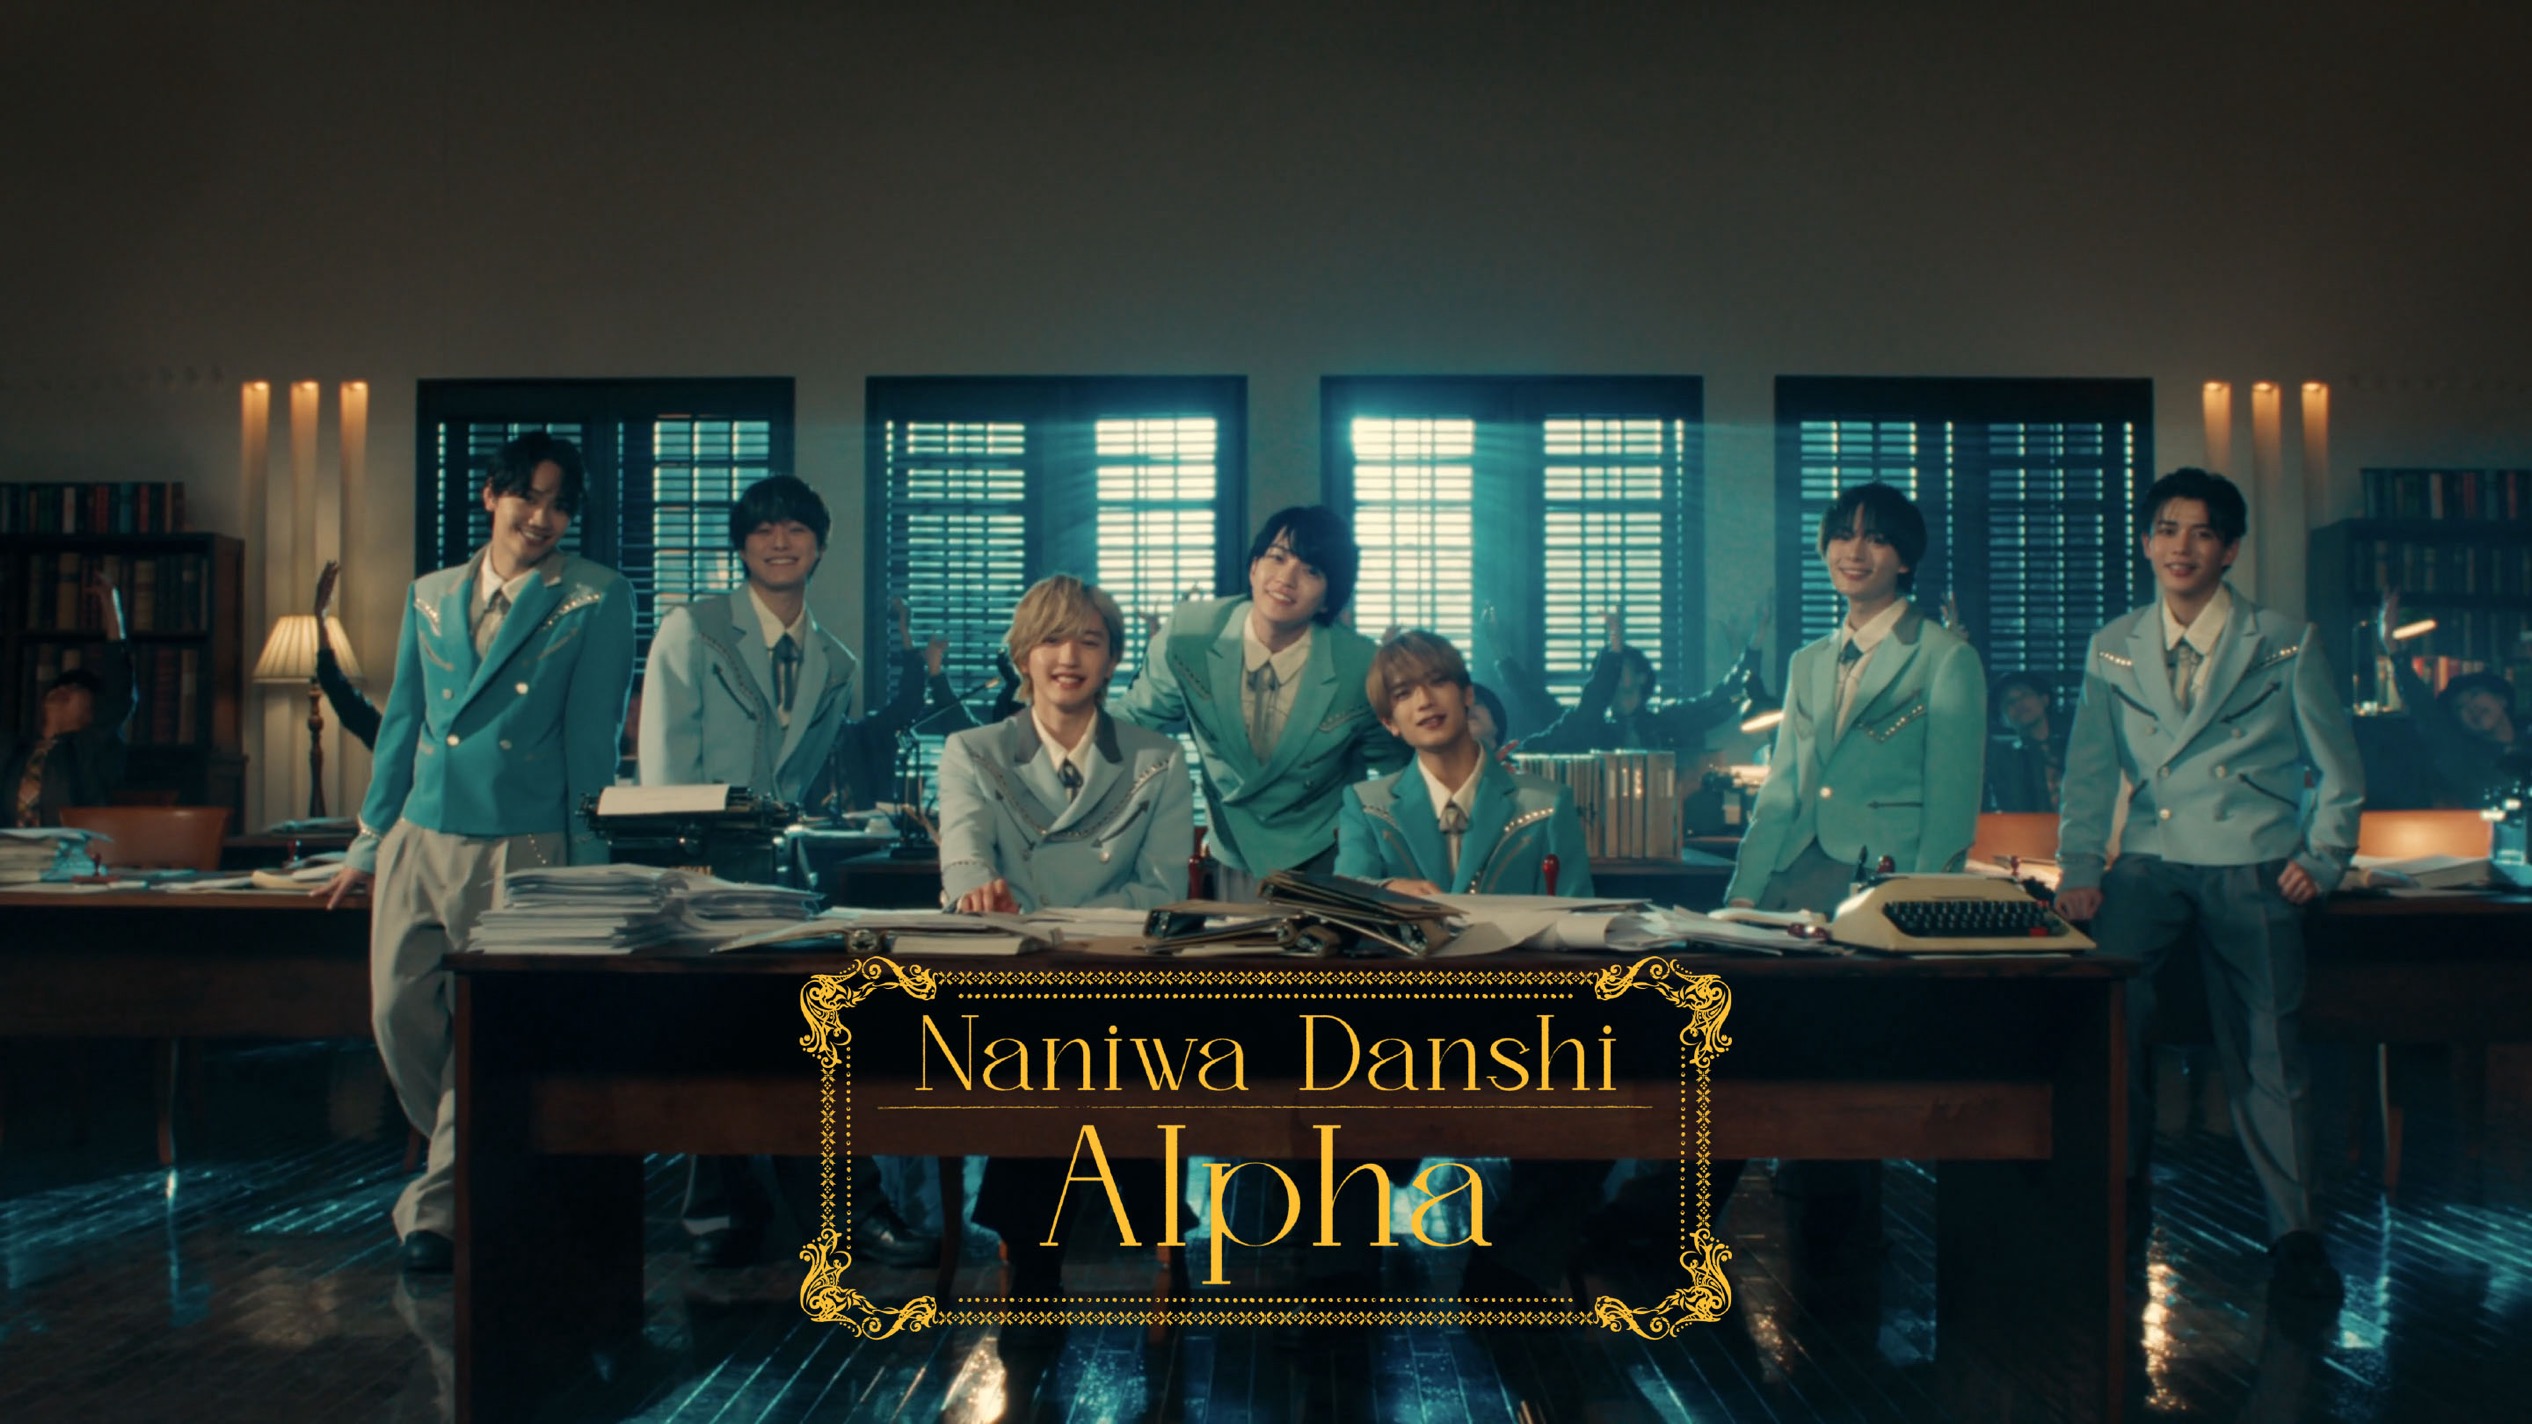 Naniwa Danshi Releases “Alpha,” Lead Track from Their Third Album